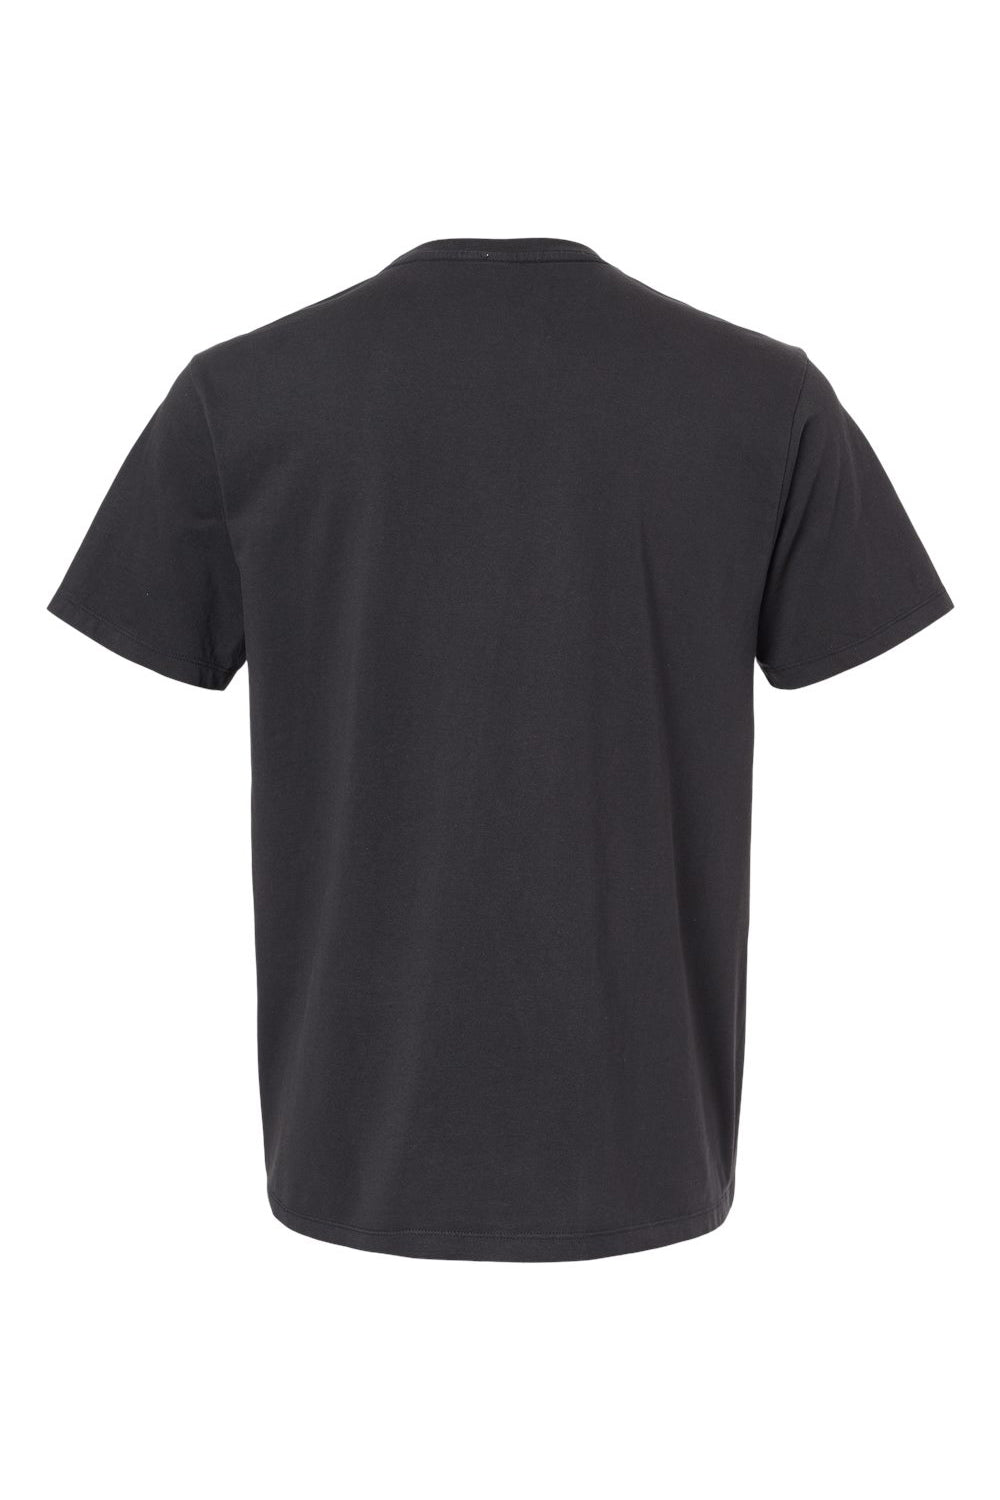 SoftShirts 400 Mens Organic Short Sleeve Crewneck T-Shirt Black Flat Back